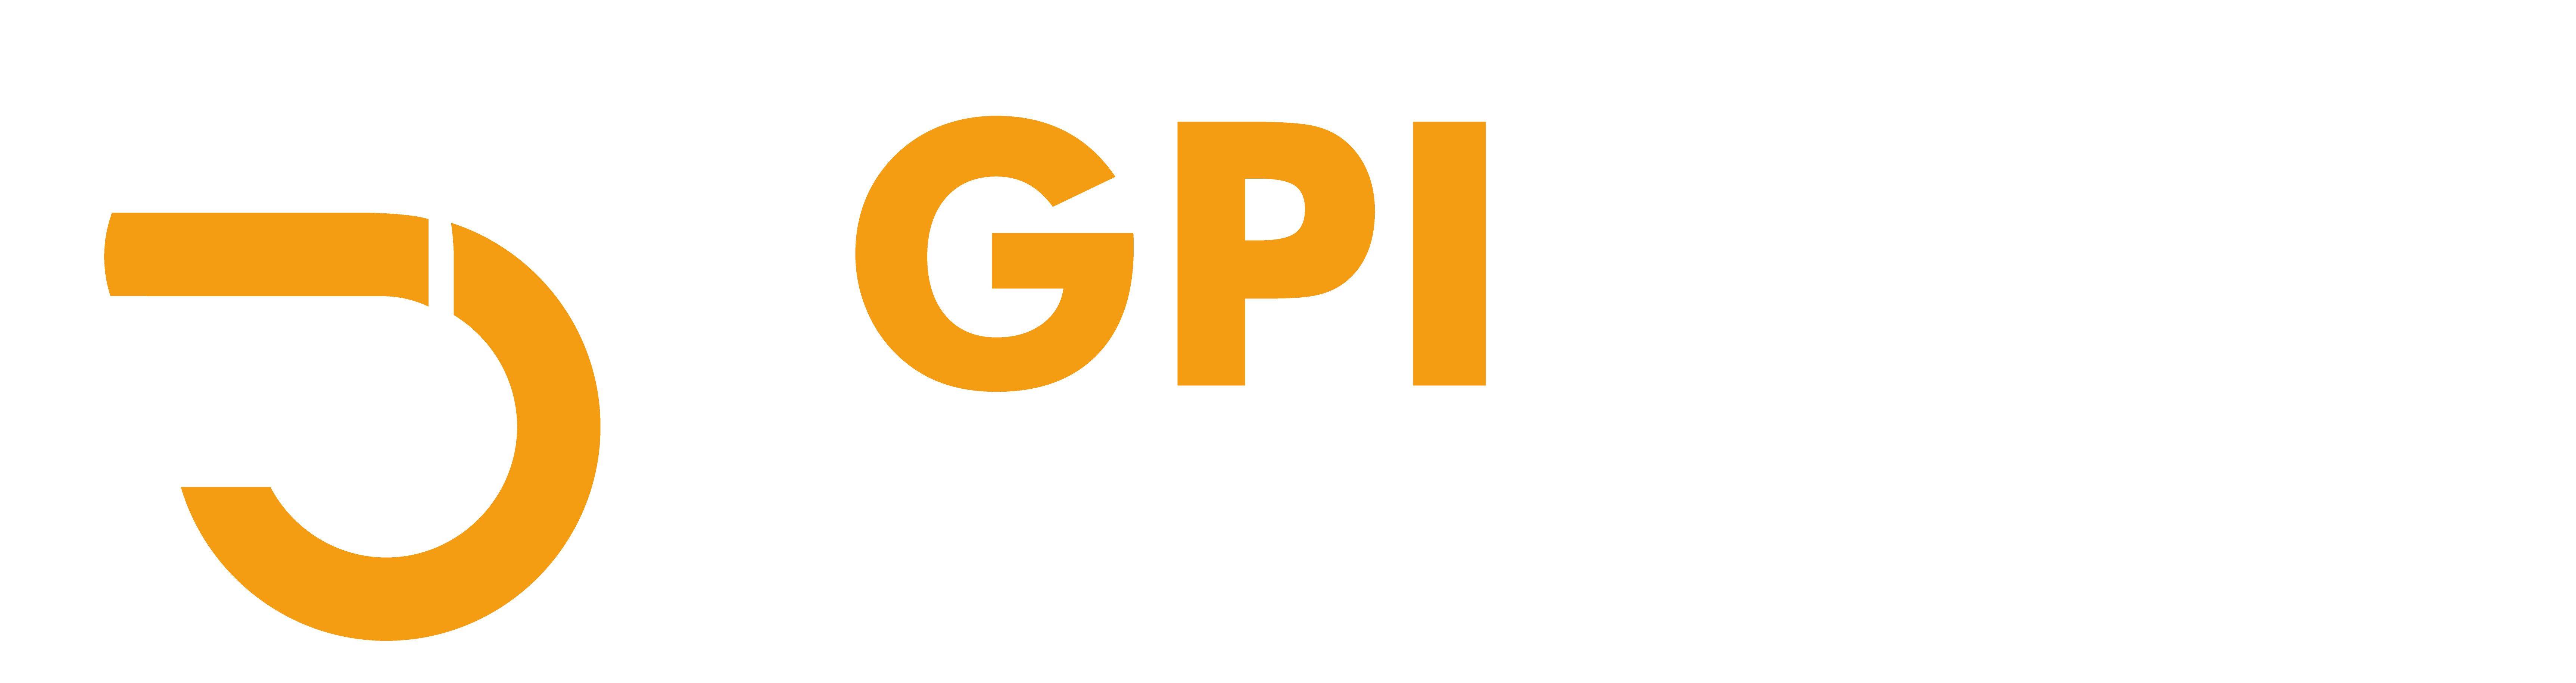 logo Geo Project Industries